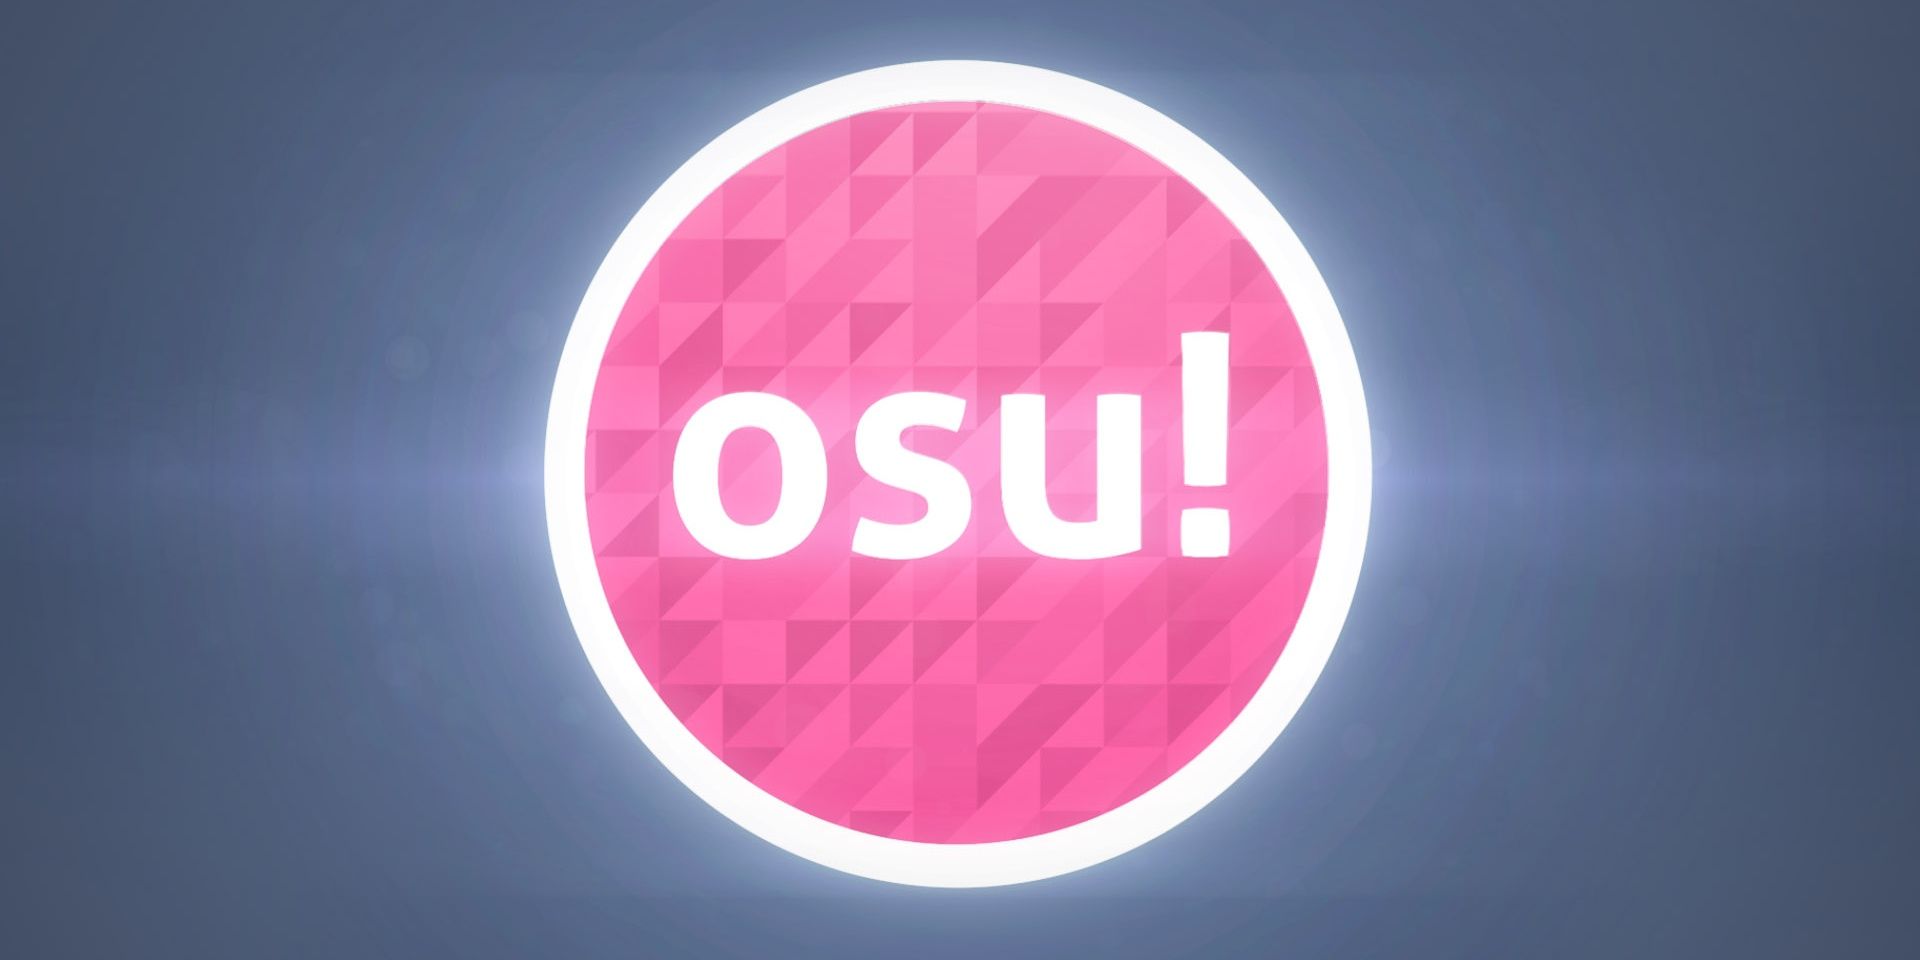 The Osu! logo